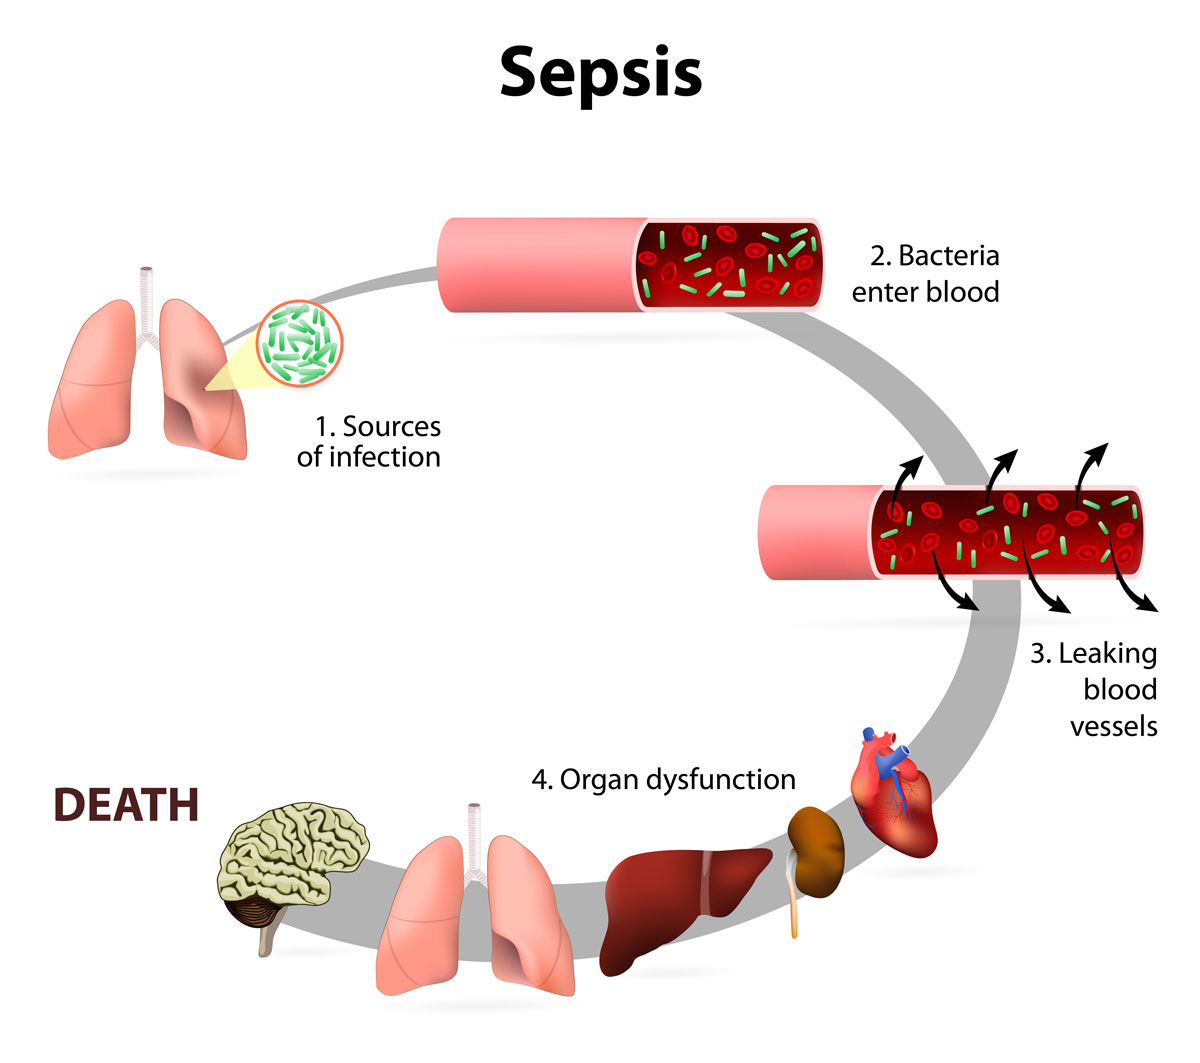 a medical diagram showing progression of sepsis